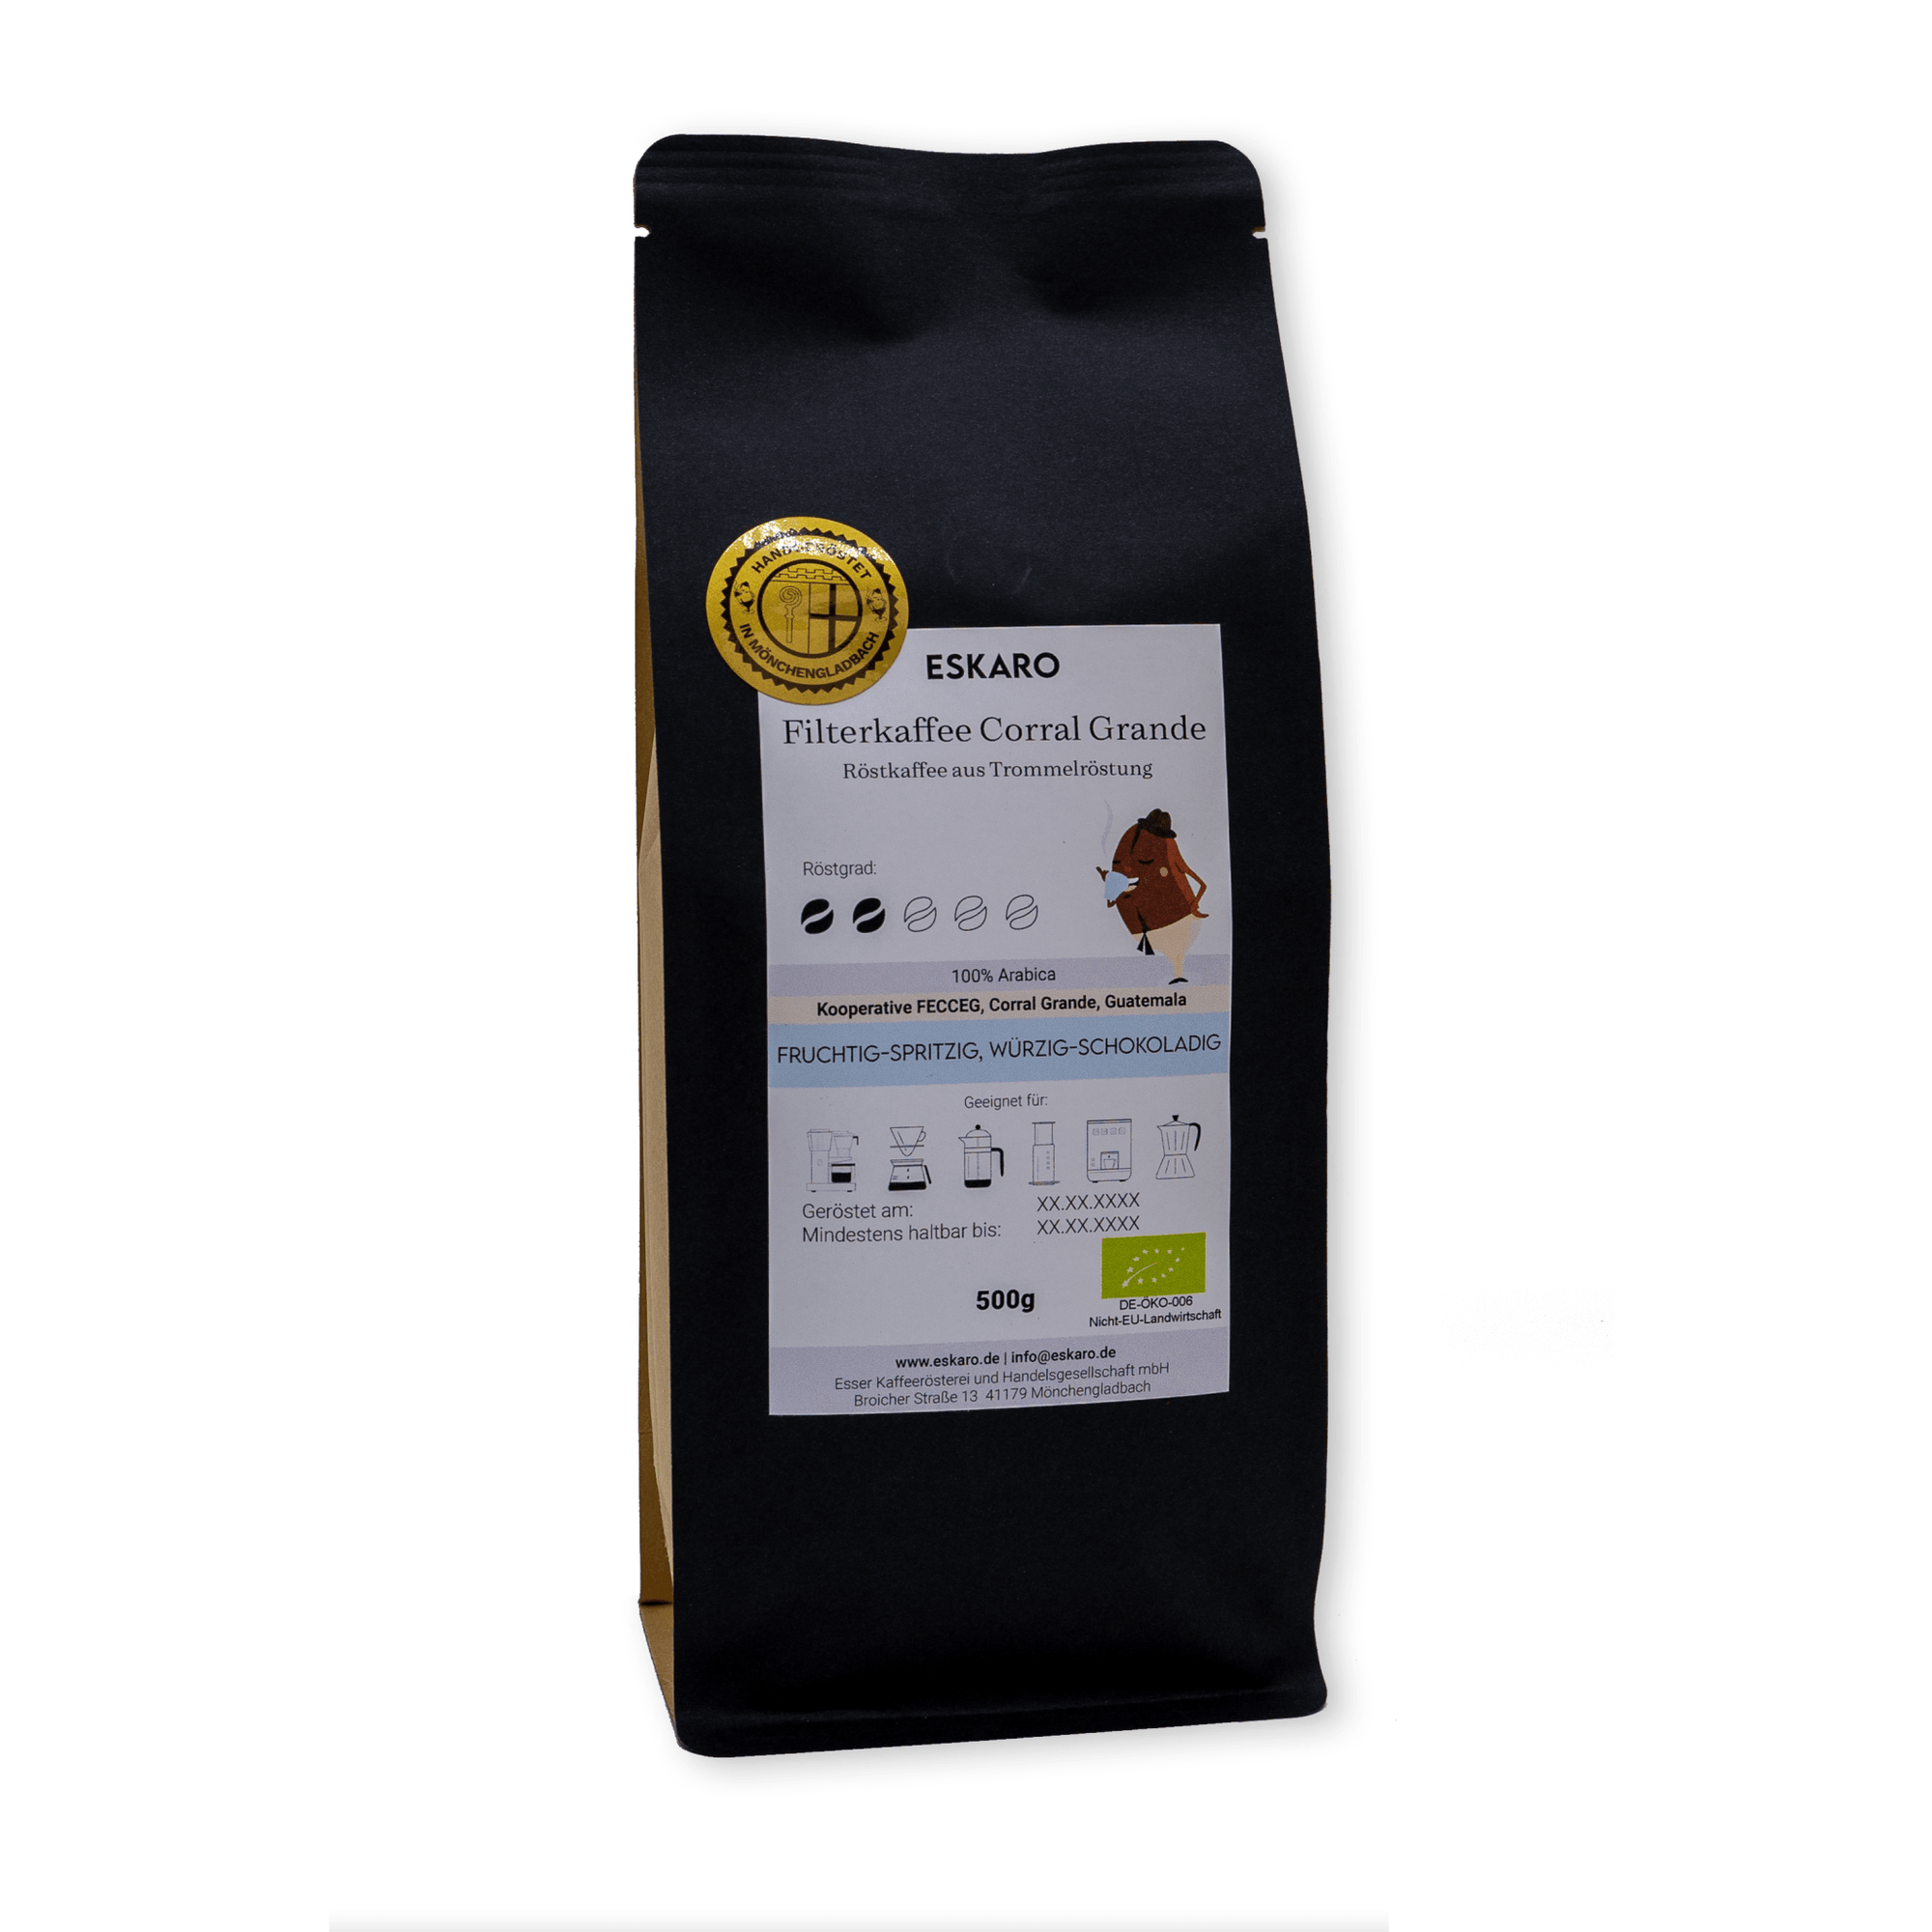 Eskaro Bio Filterkaffee Corral Grande - Eskaro - Esser Kaffeerösterei und Handelsgesellschaft mbH